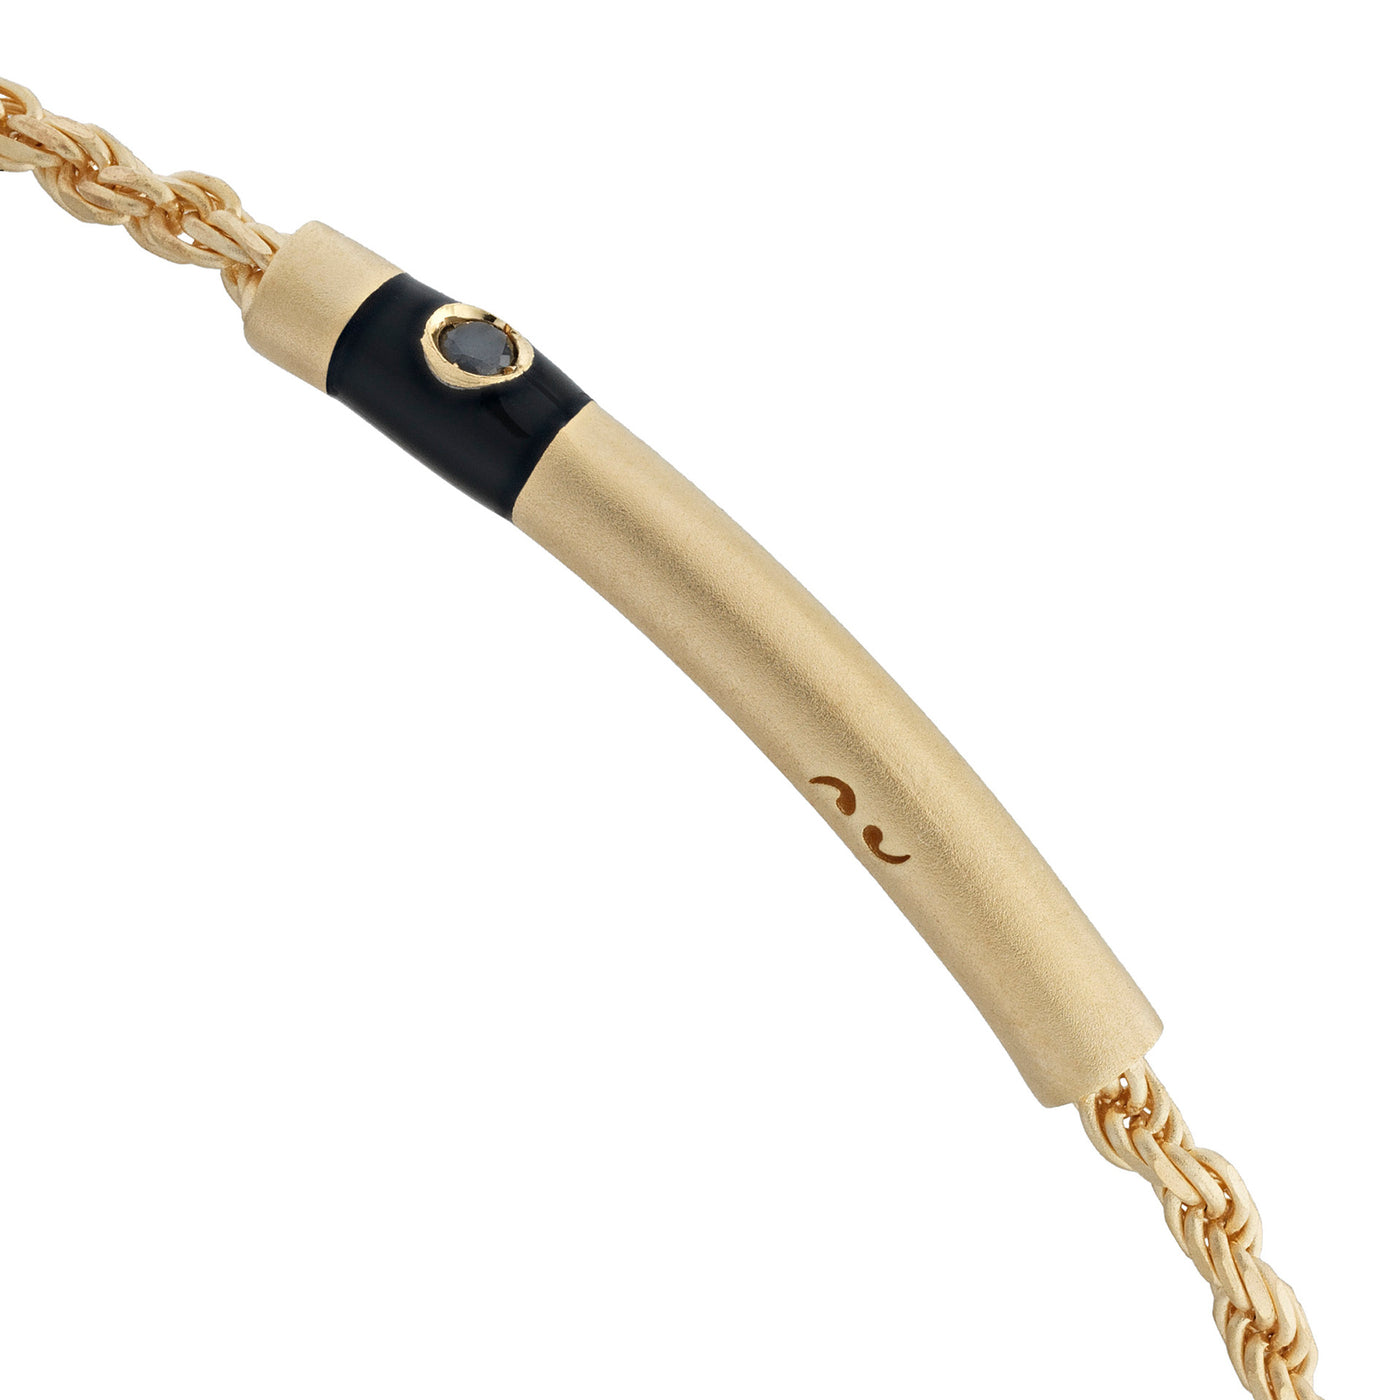 ULYSSES Cord 18K Yellow Gold Vermeil Bracelet with black diamond and enamel